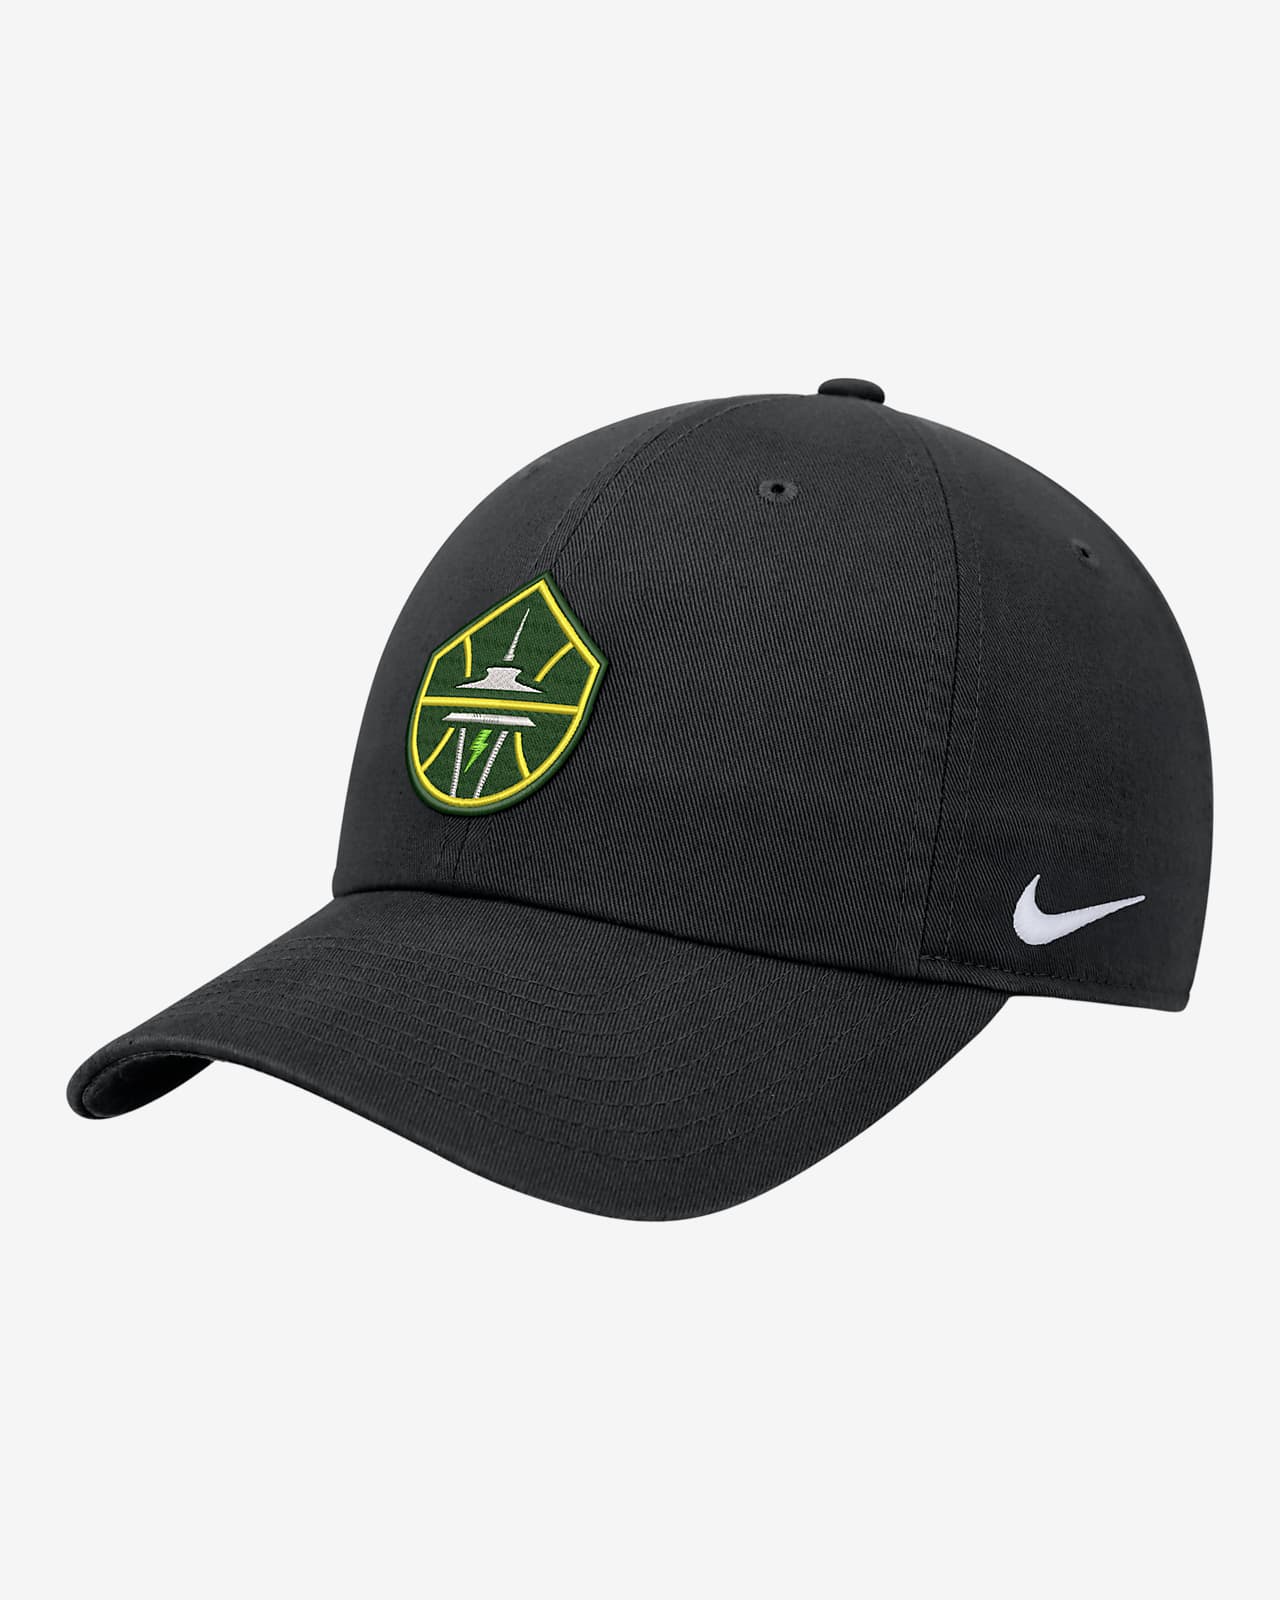 Seattle Storm Club Nike WNBA Cap